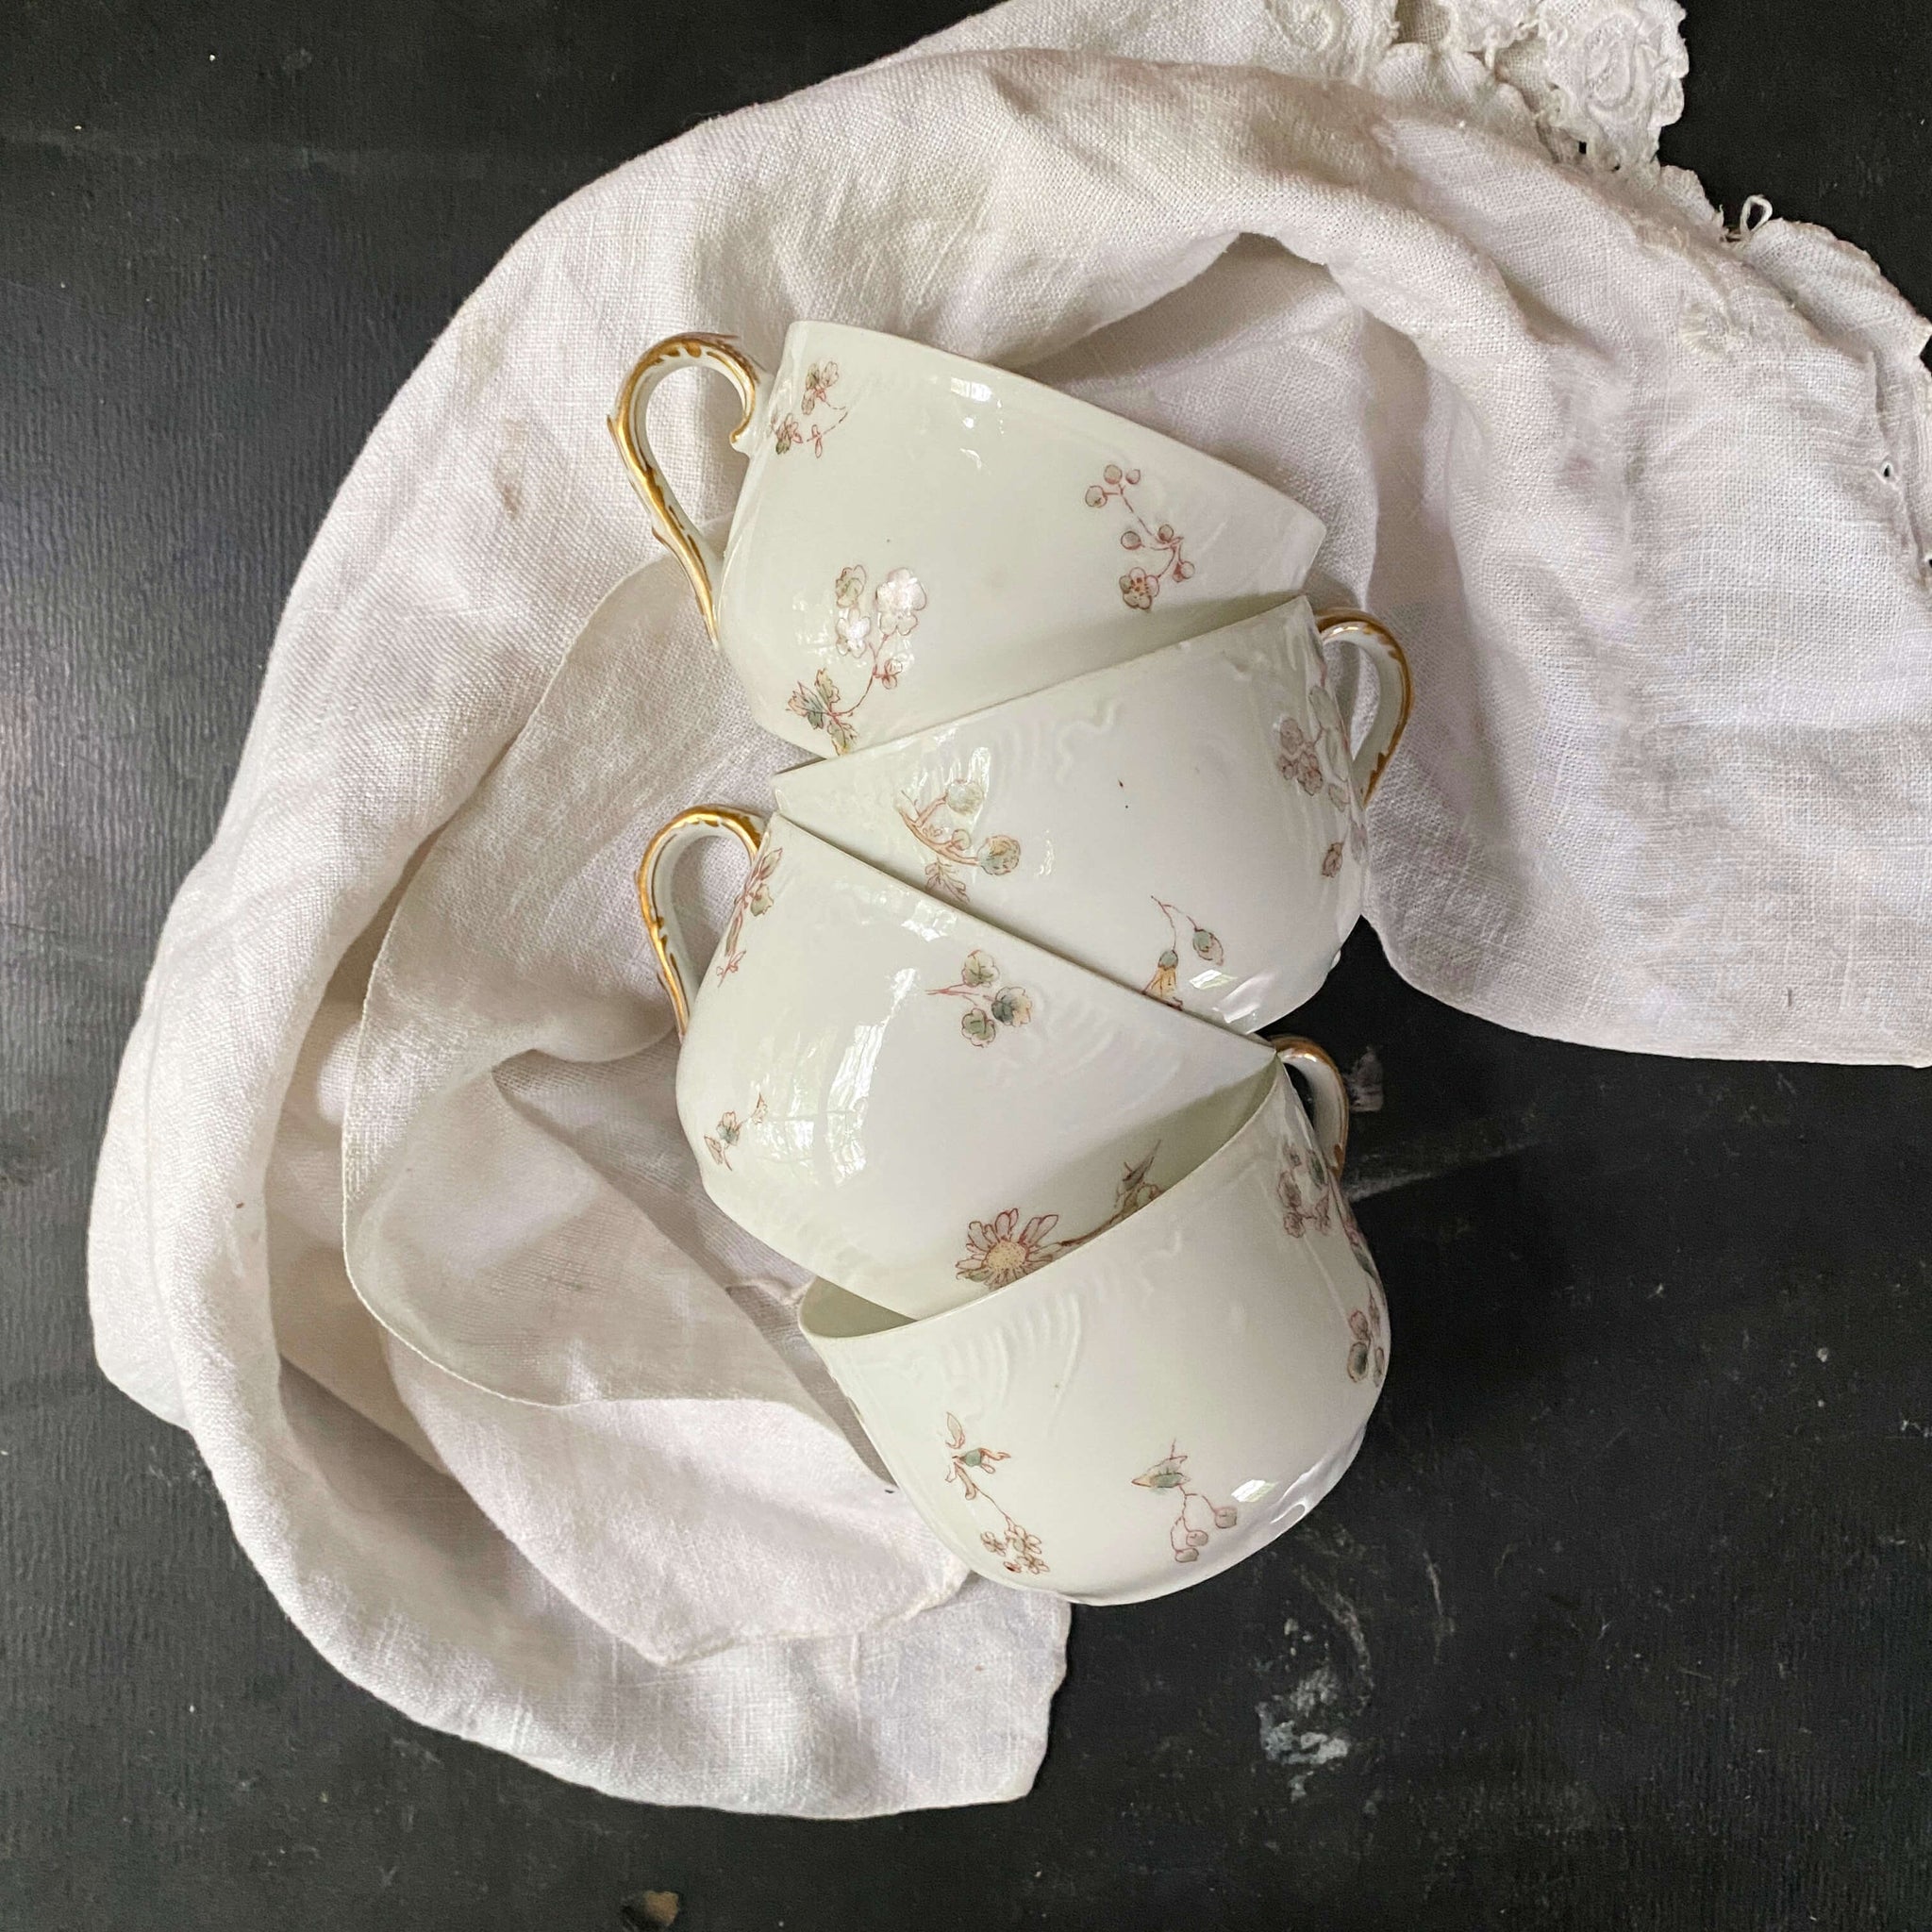 Antique French Porcelain Teacups Charles Field Haviland Gerard, Dufraisseix & Morel circa 1881-1890- Set of Four